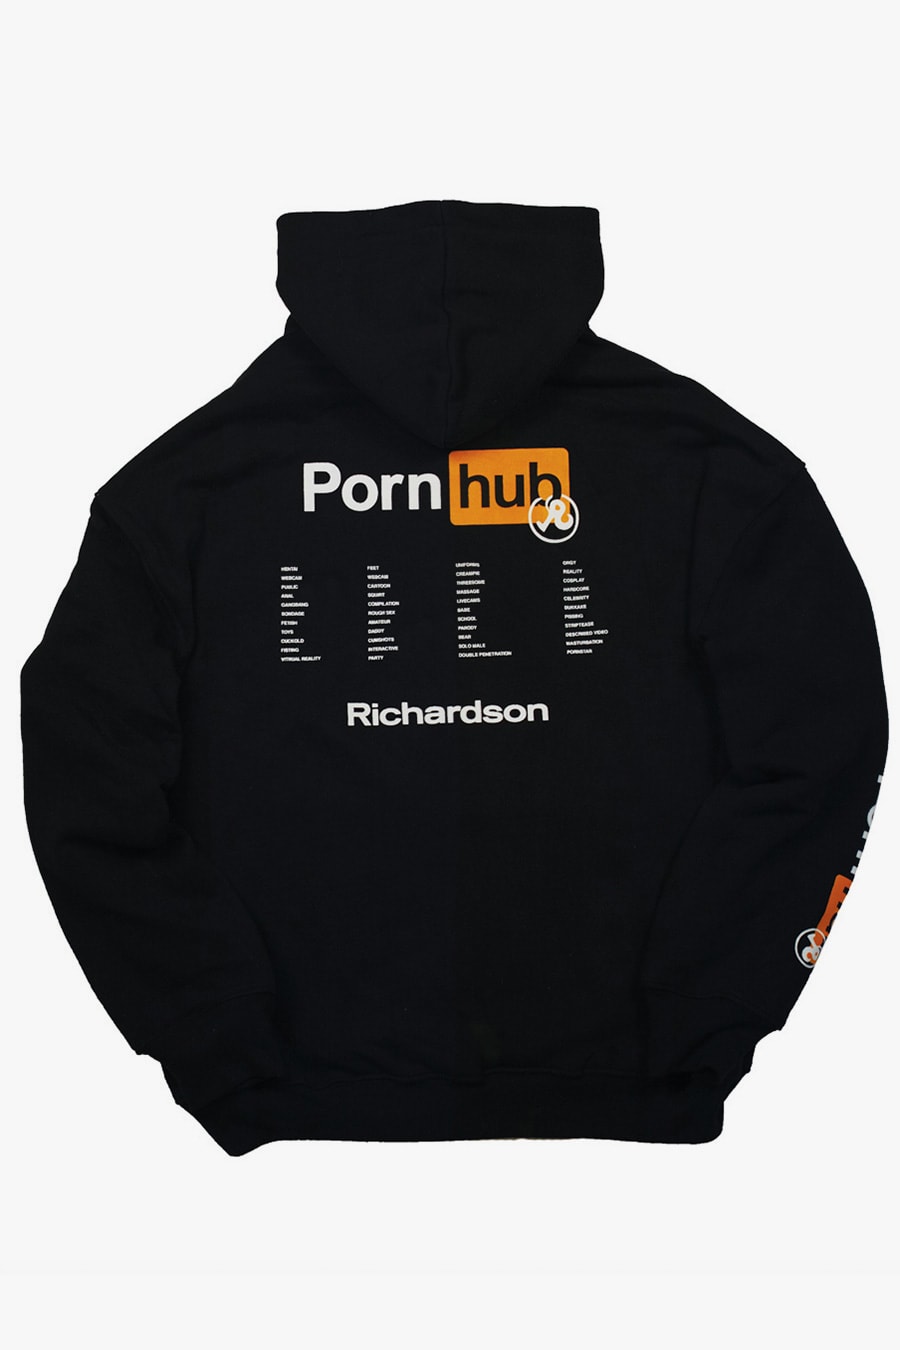 Richardson x PornHub Capsule Collaboration cap hoodie t shirt long sleeve short sleeve MA 1 swimsuit tote